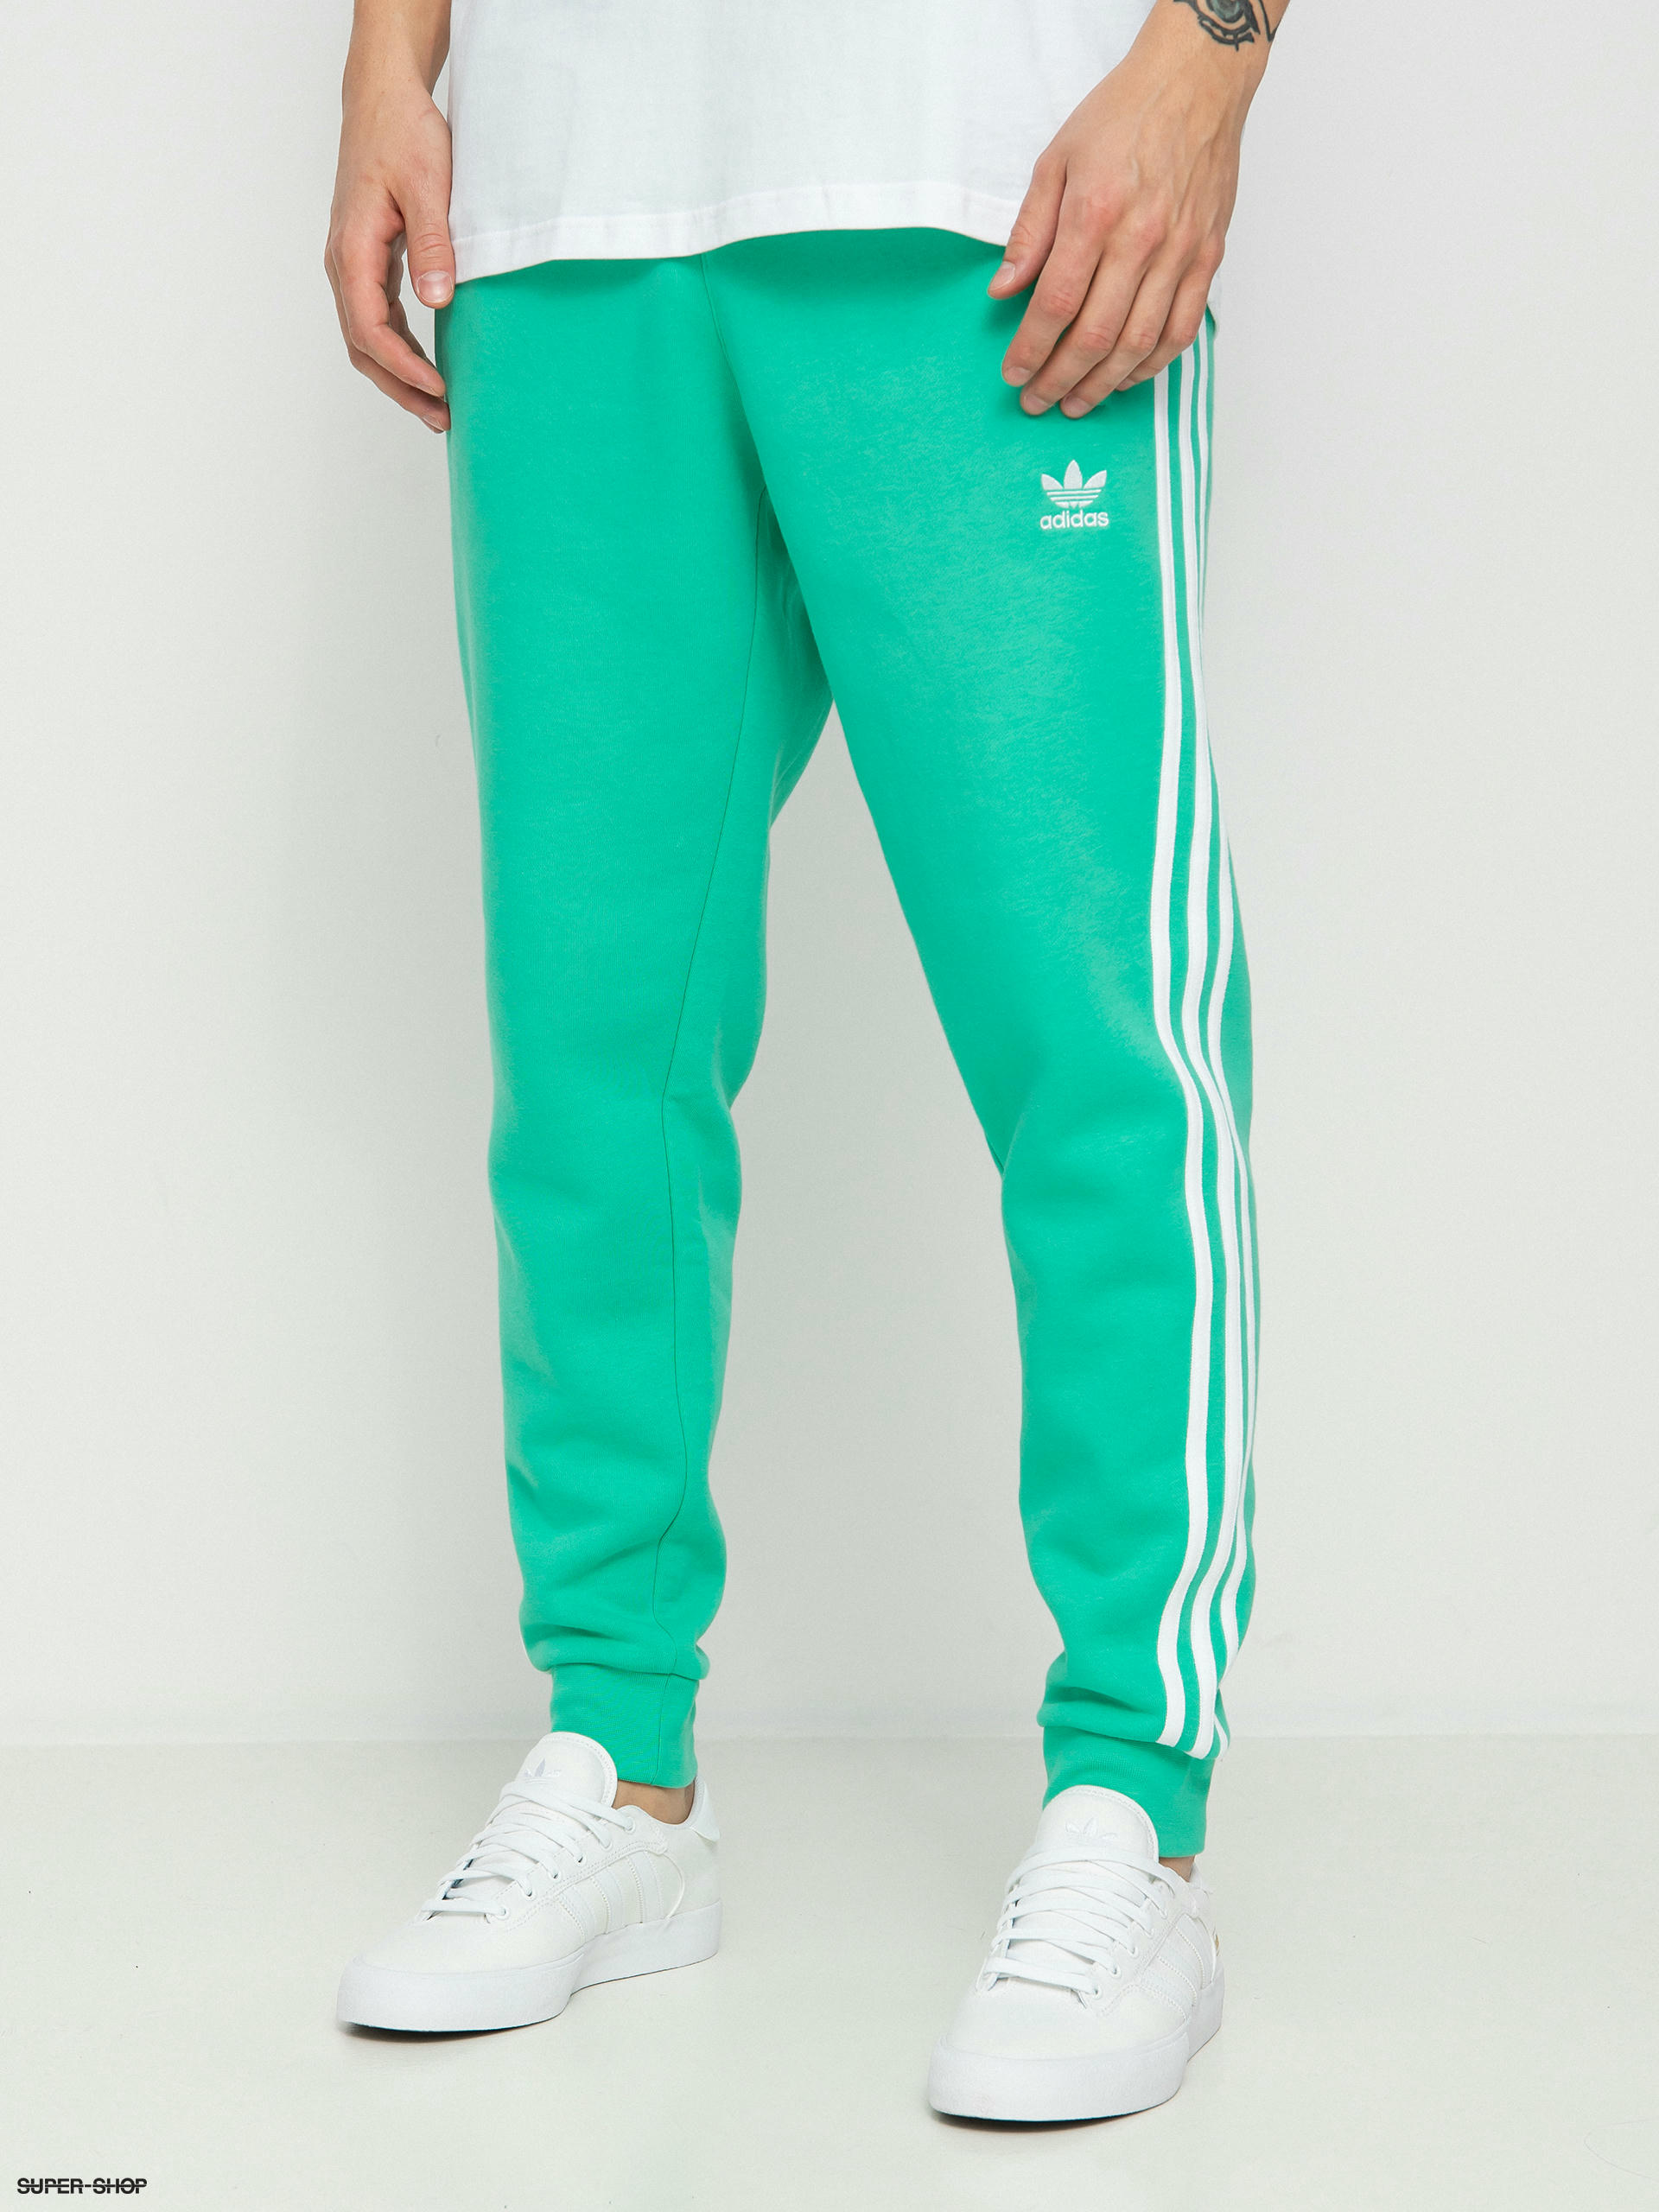 Adidas Original pants, Men's Fashion, Activewear on Carousell